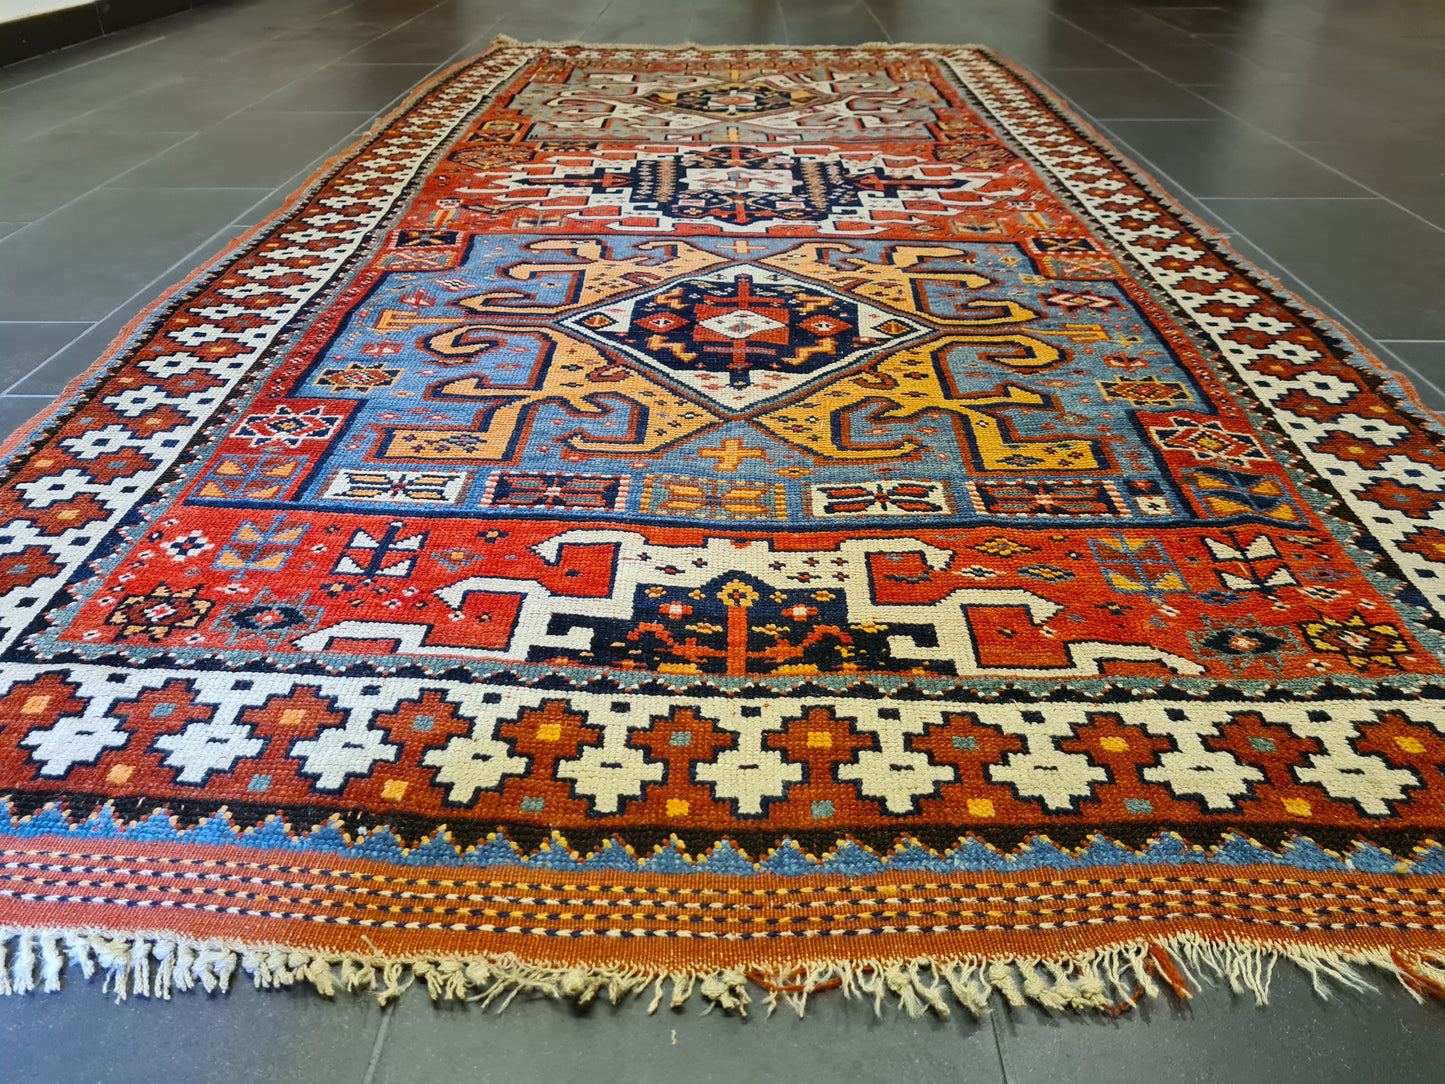 Antiker Kasak Sammlerstück Teppich – Wertvoller Läufer 297x140cm